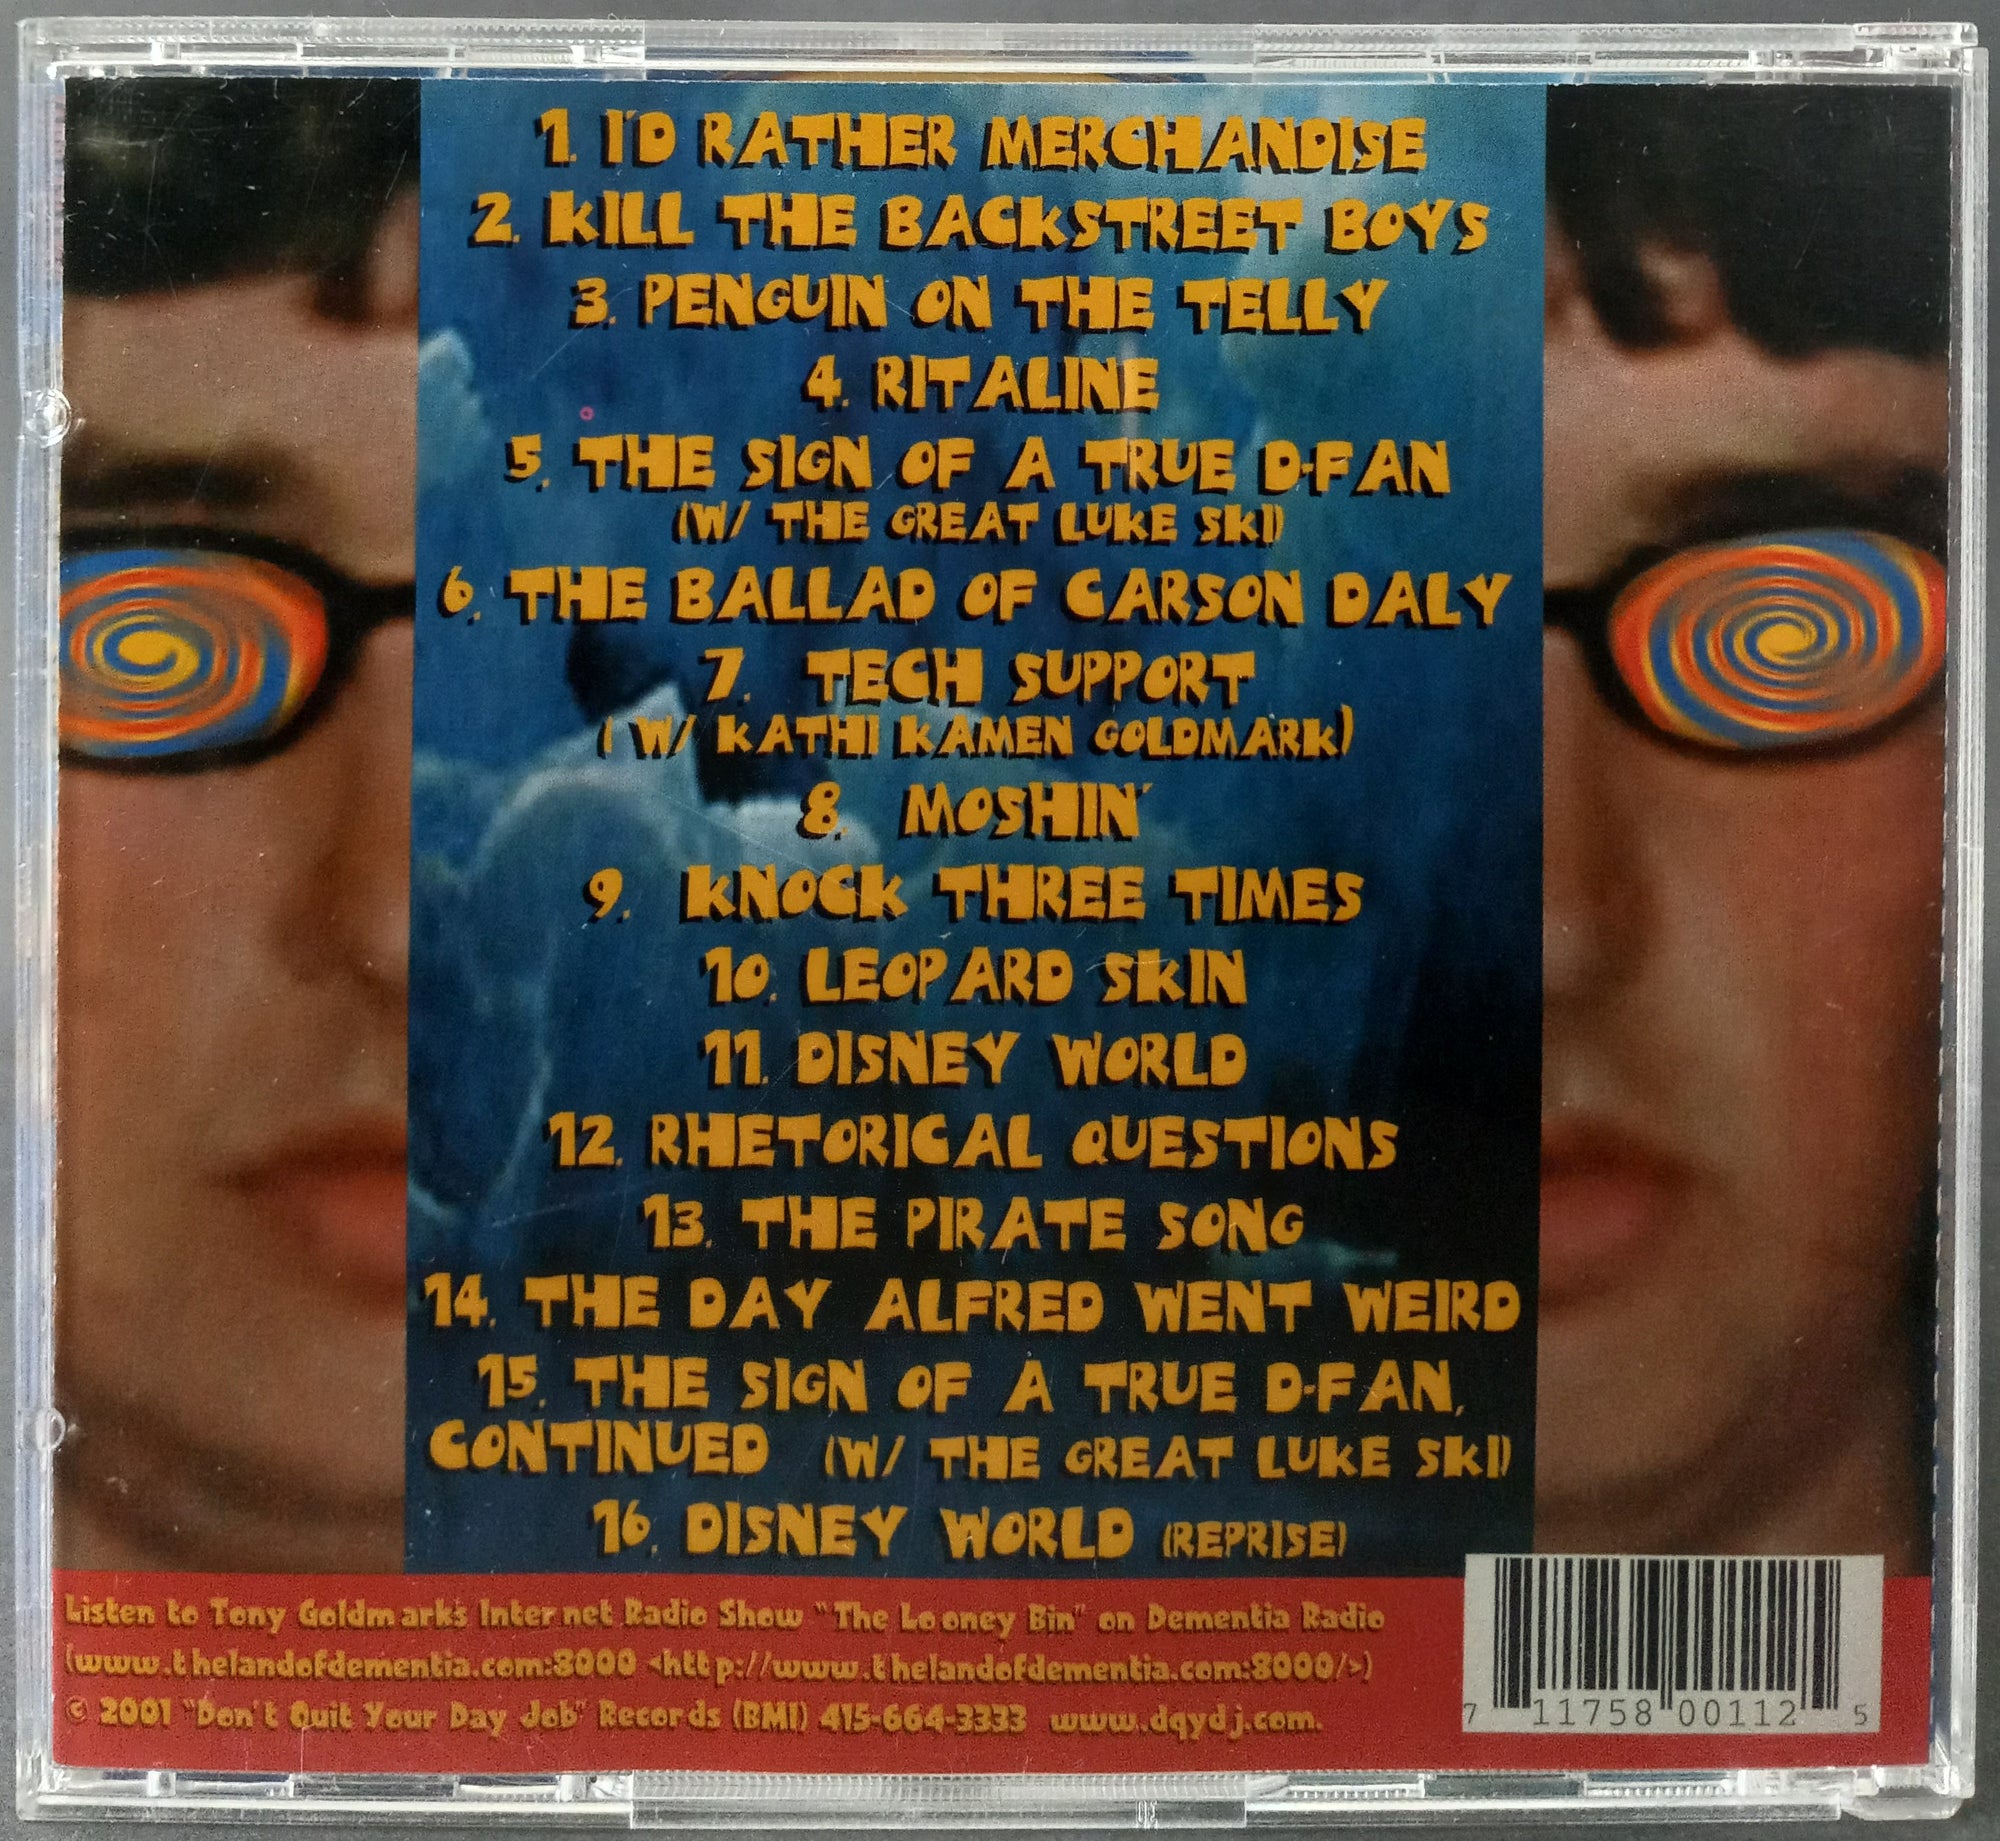 Tony-Goldmark-Masterpiece-Weirder-CD